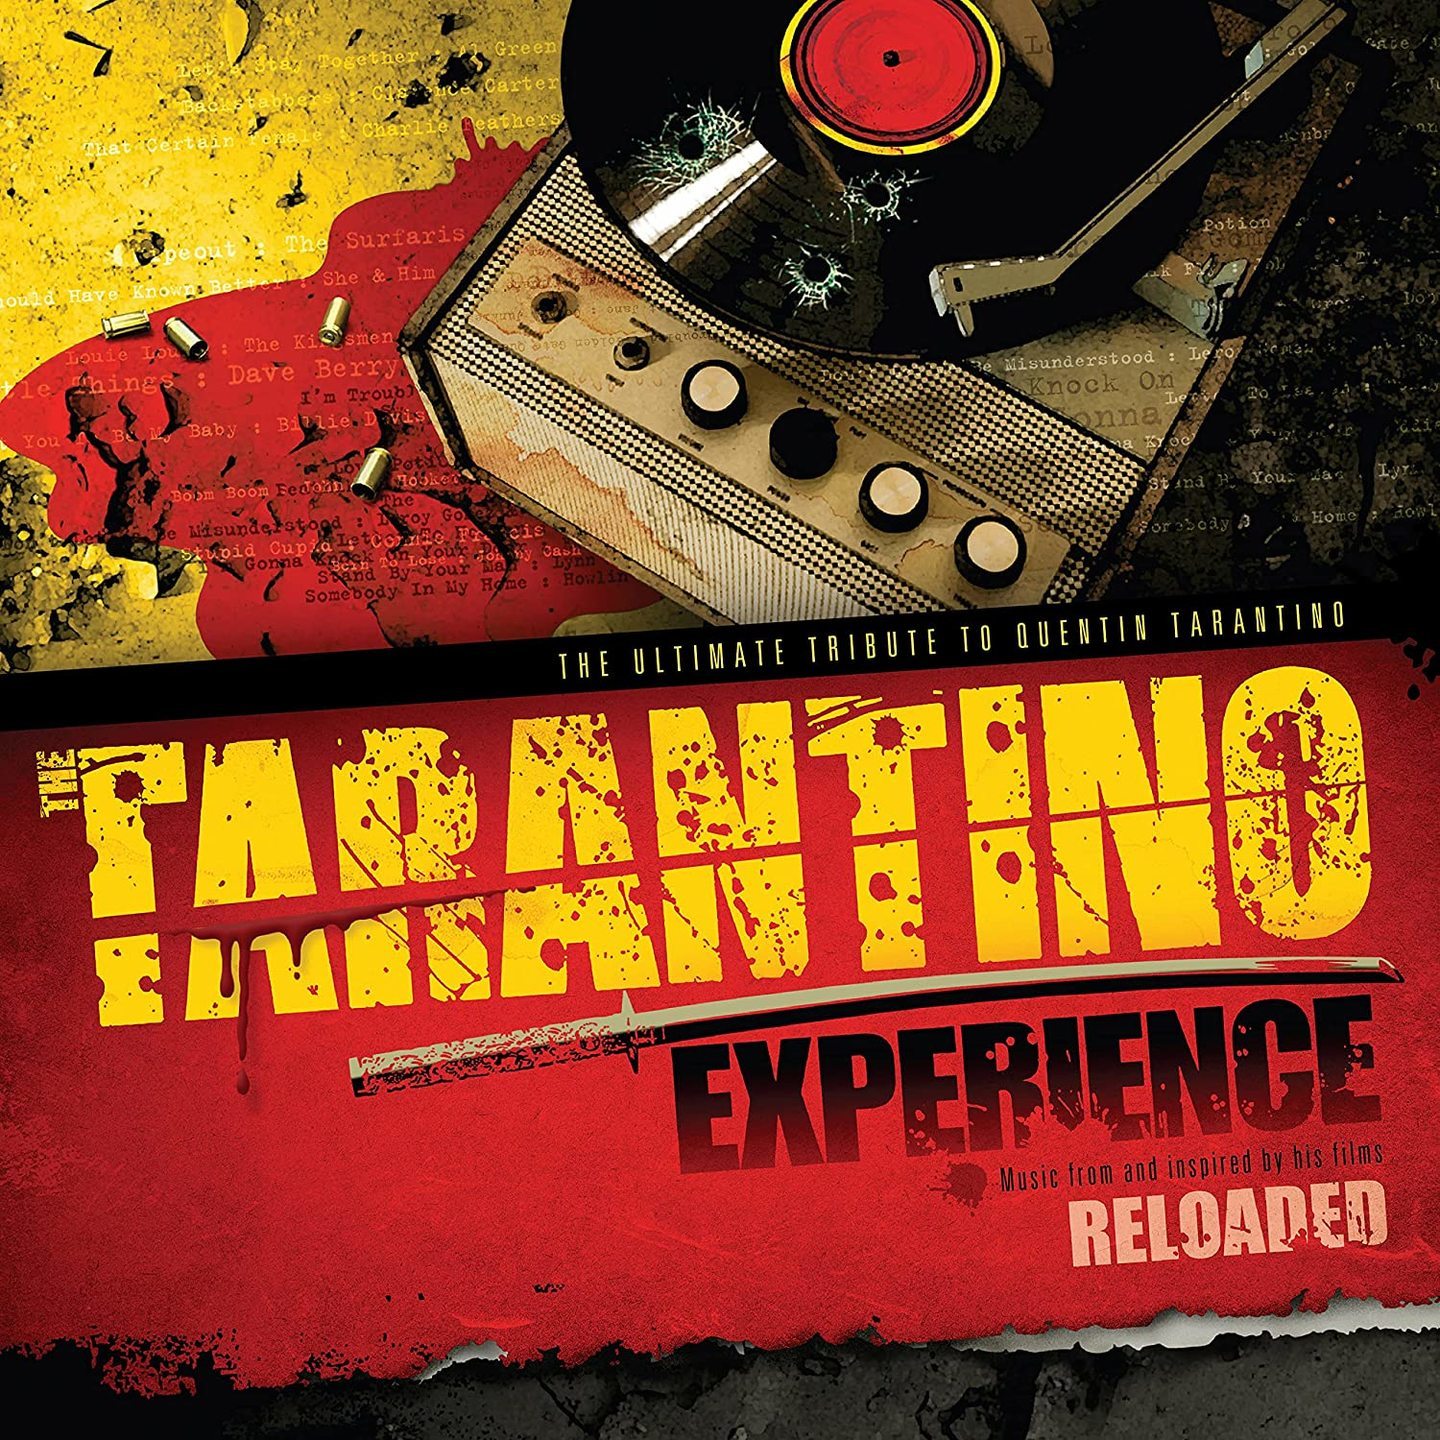 VA - Tarantino Experience Reloaded 2xLP 180g, Colour Vinyl